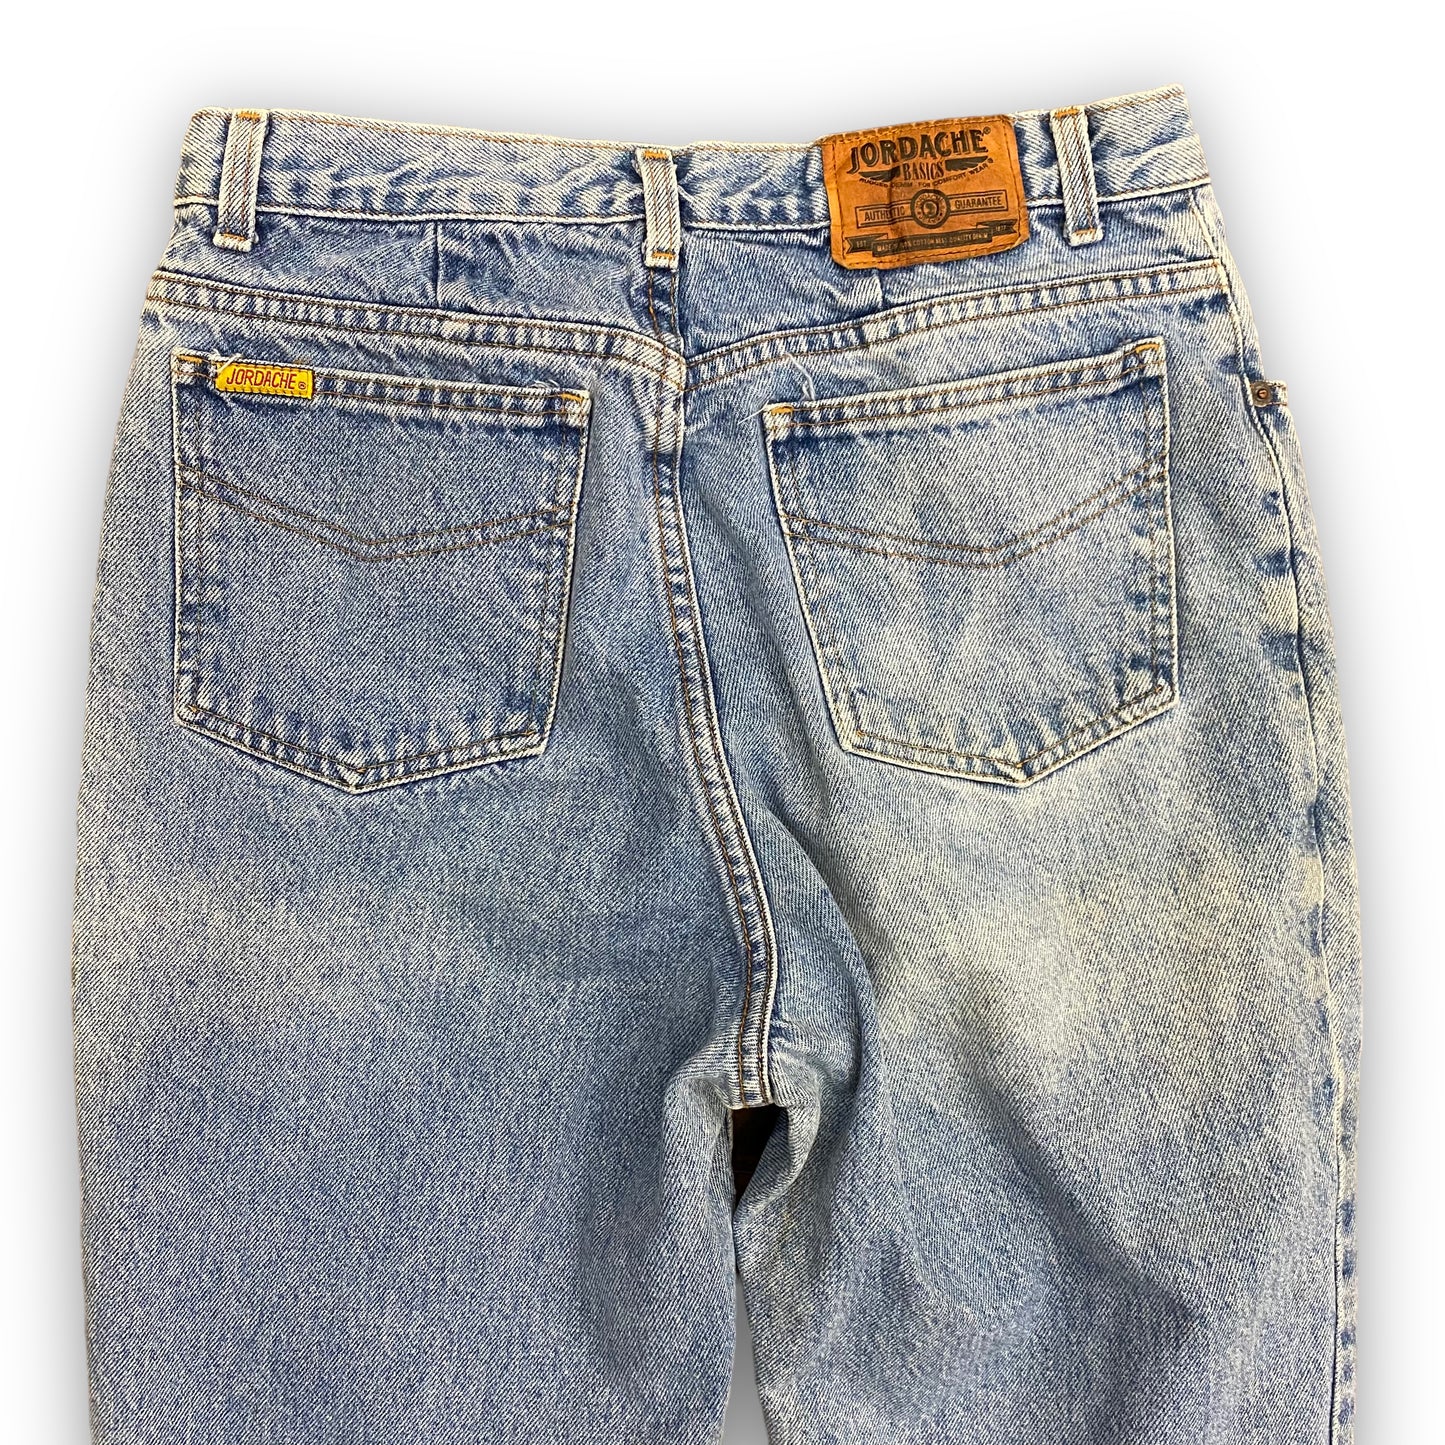 Vintage Jordache Medium Wash Jeans - 29"x29"